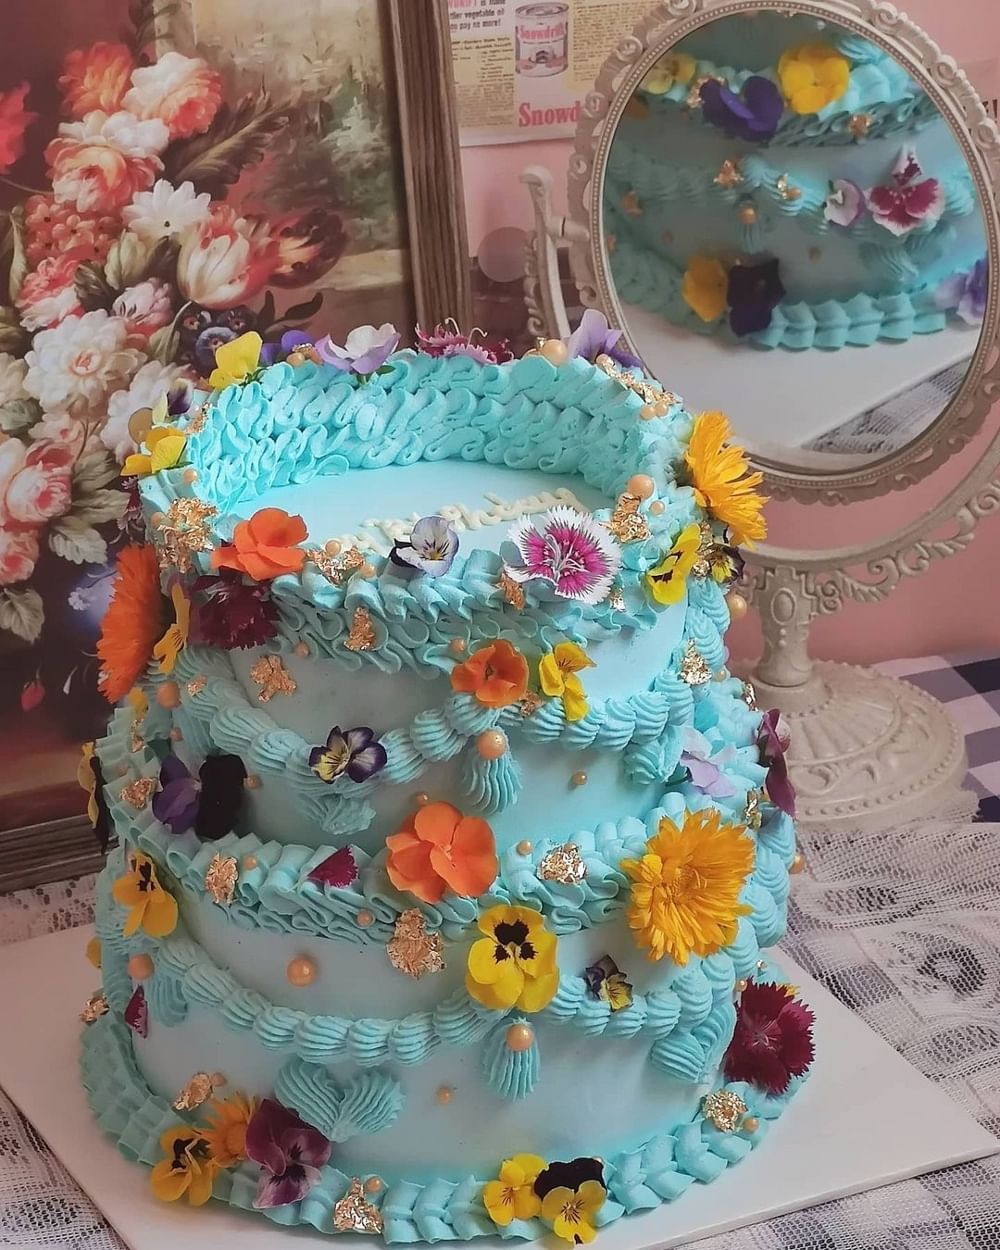 Retro Theme Adorable Designer Cake - Avon Bakers